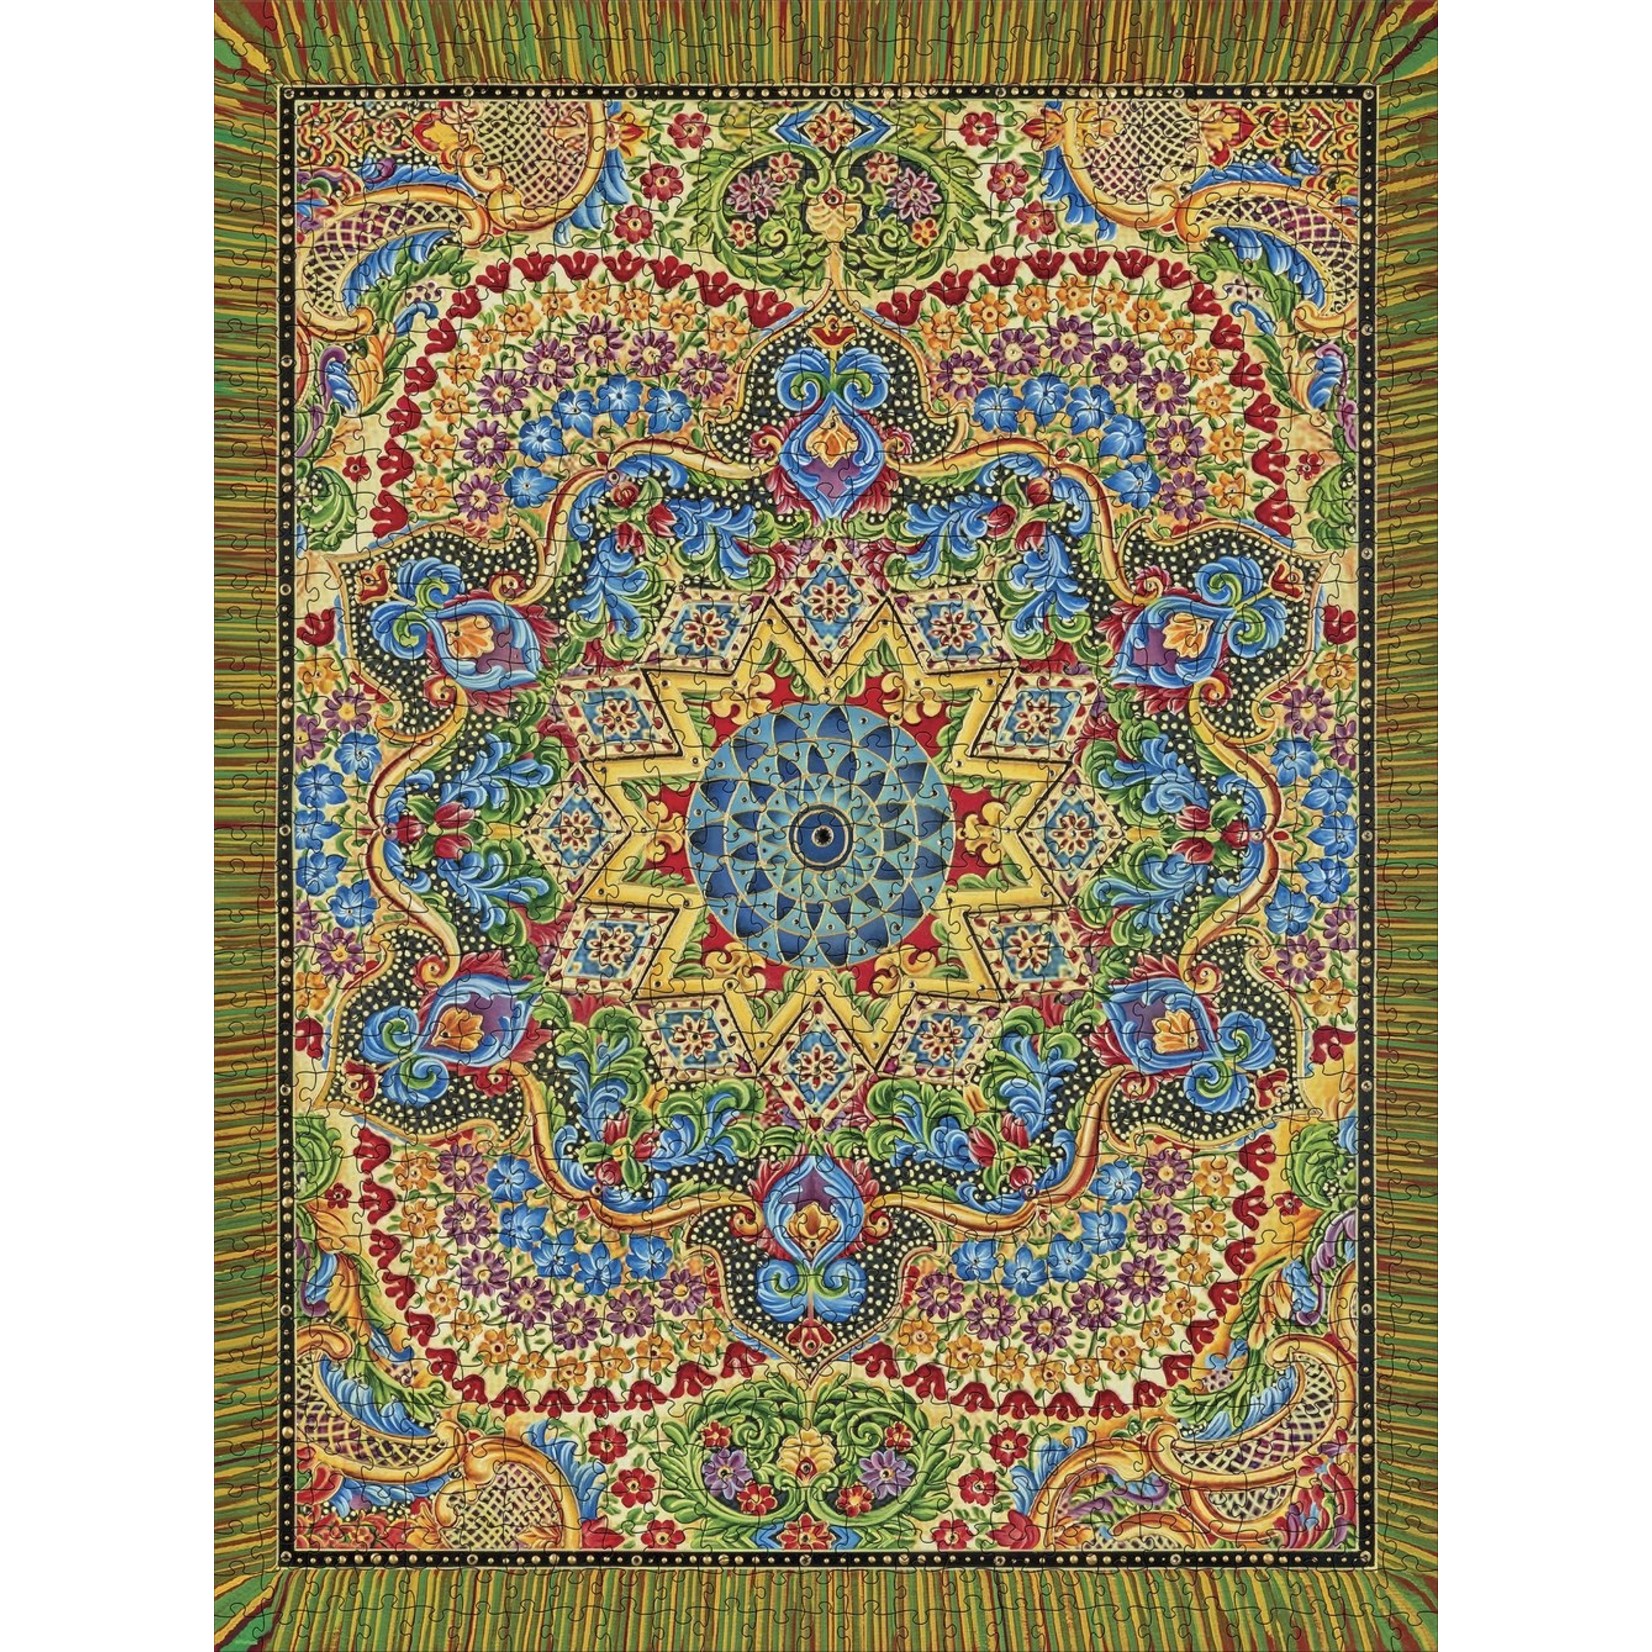 Paul Heussenstamm: Tapestry Mandala 1000pc